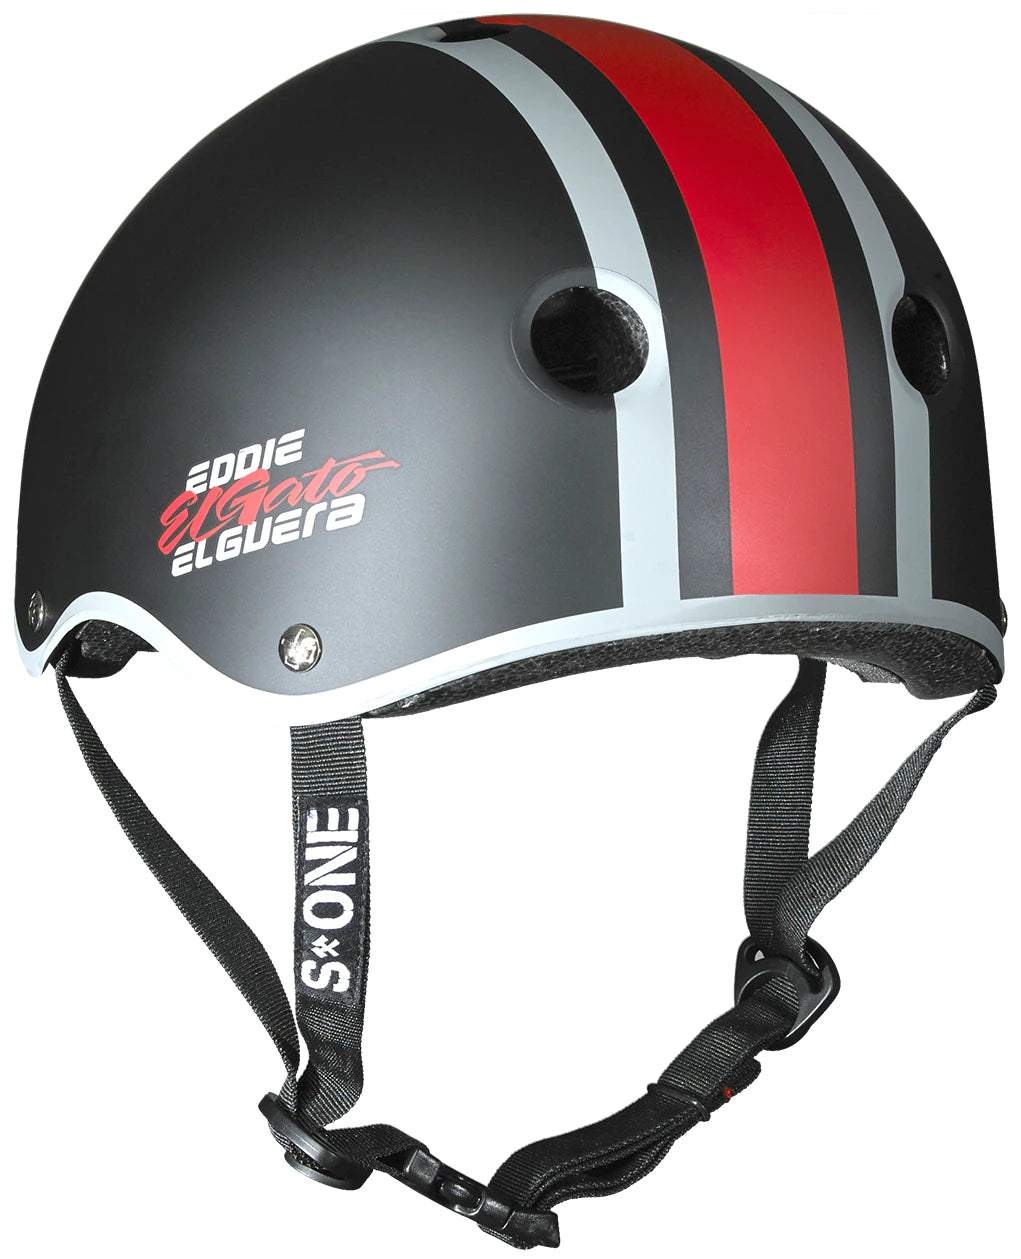 S1 Lifer Helmet - Helmet Black mast Bed